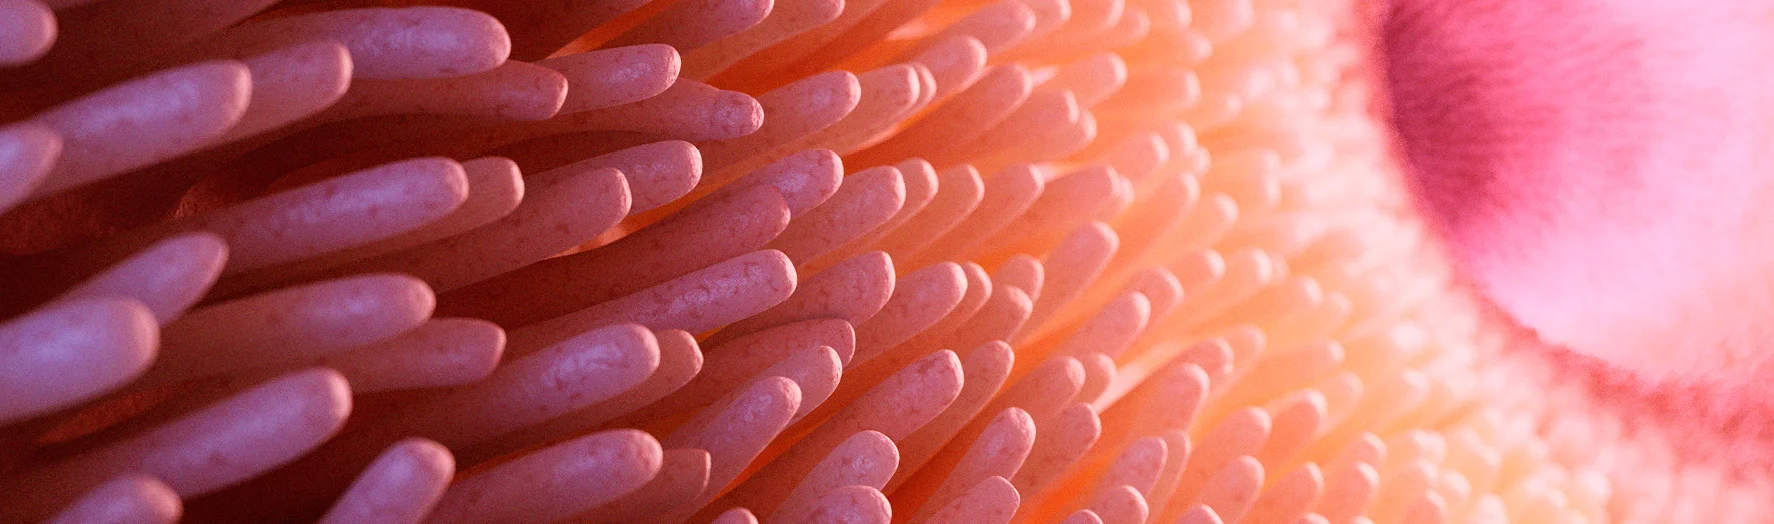 Microscopic image of villi